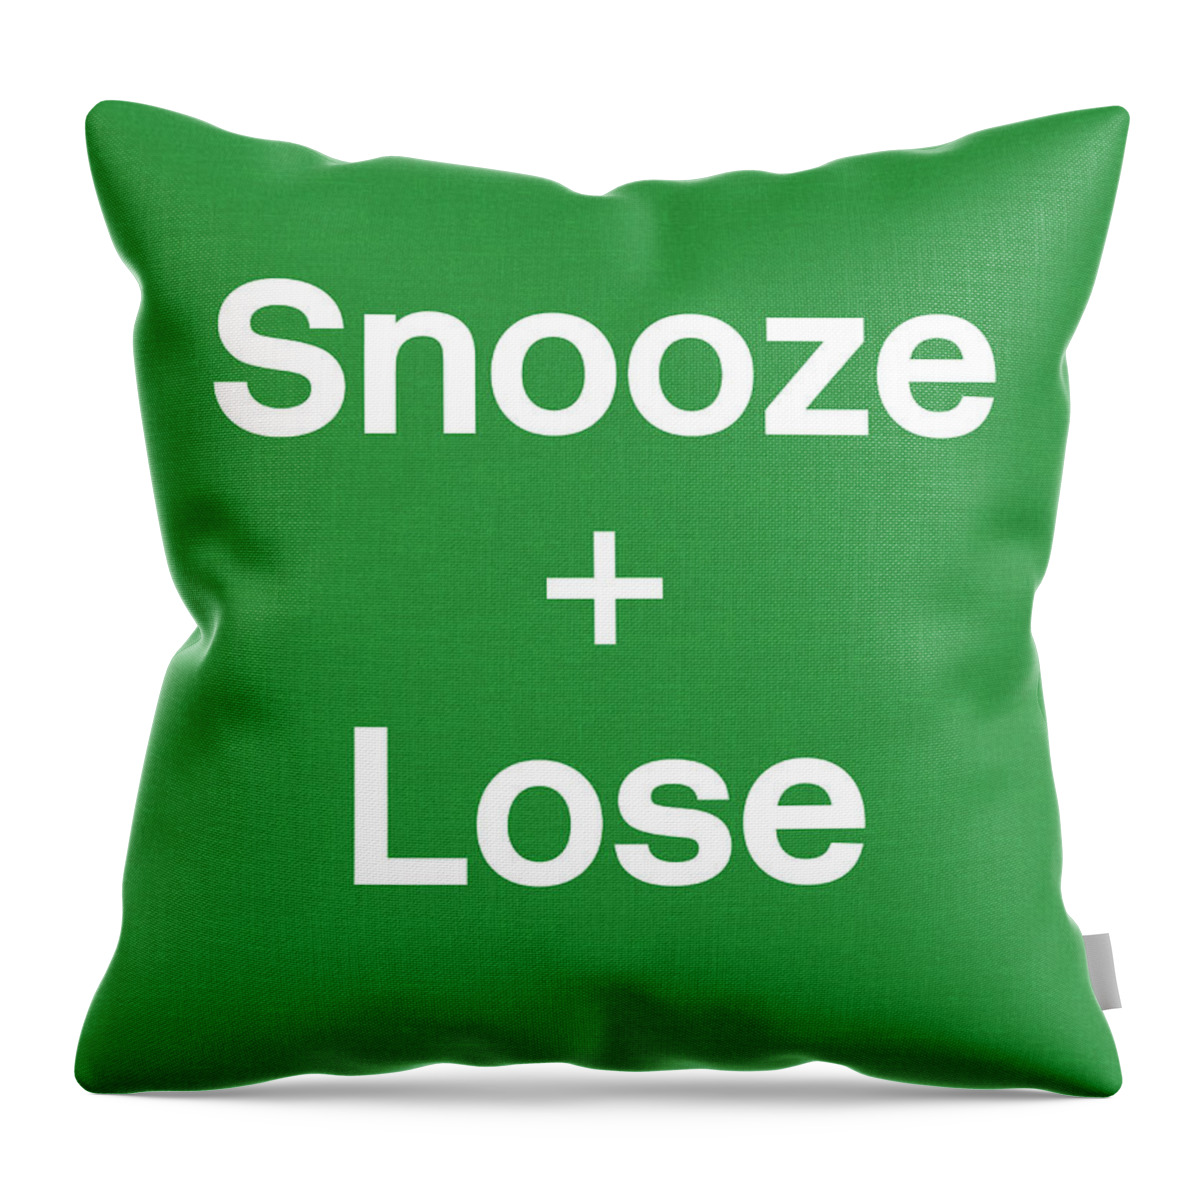 Snooze Throw Pillow featuring the digital art Snooze and Lose- Art by Linda Woods by Linda Woods